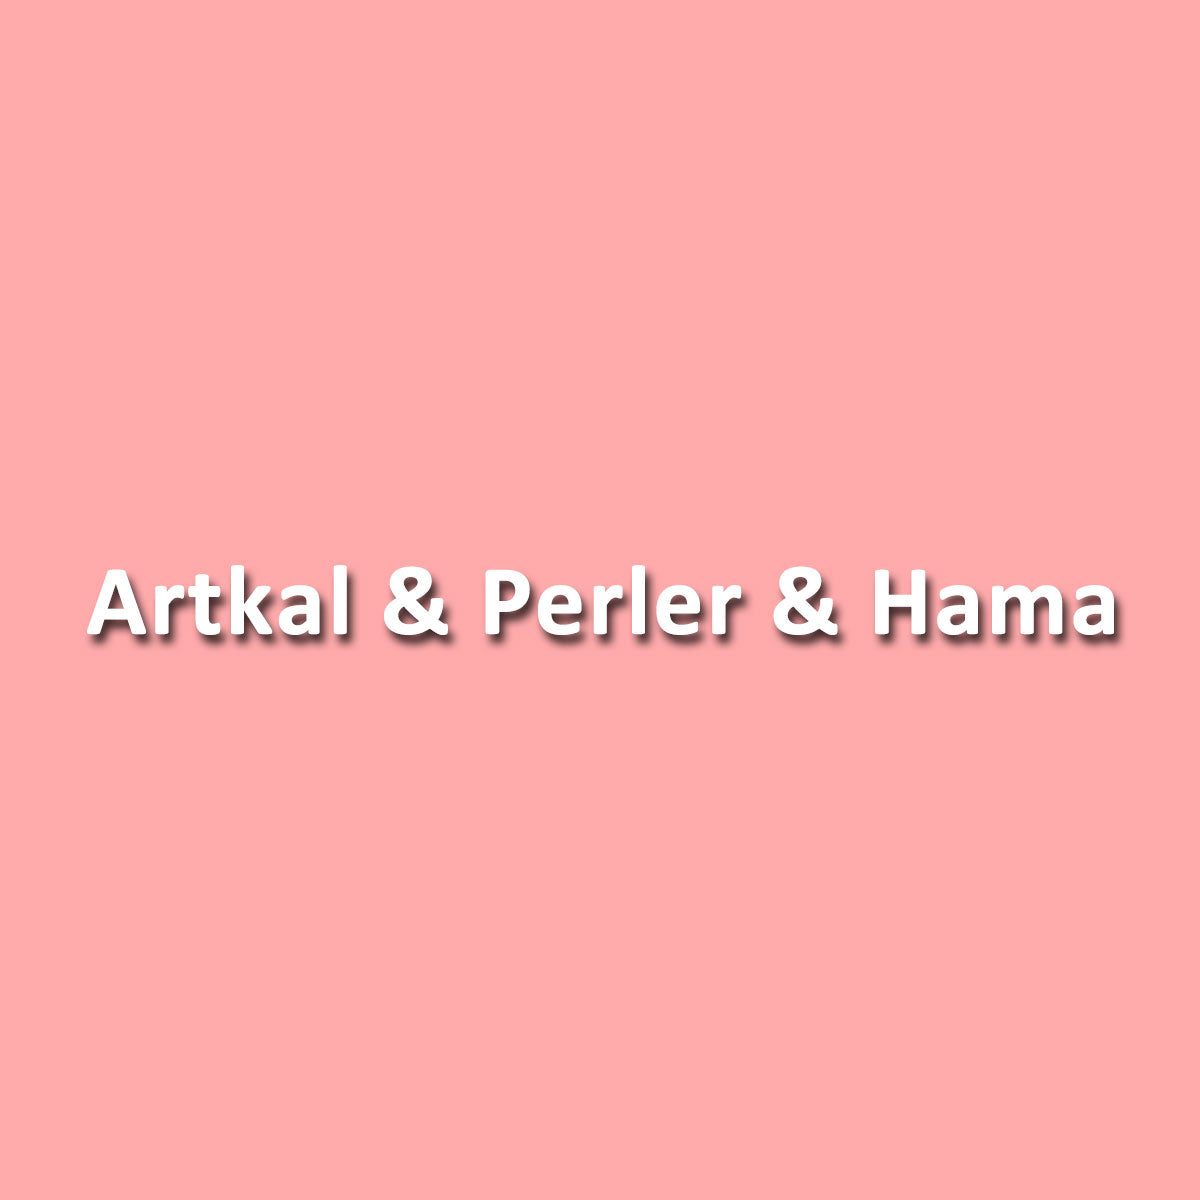 Quelles séries de perles Artkal sont compatibles avec les perles perler et hama ?